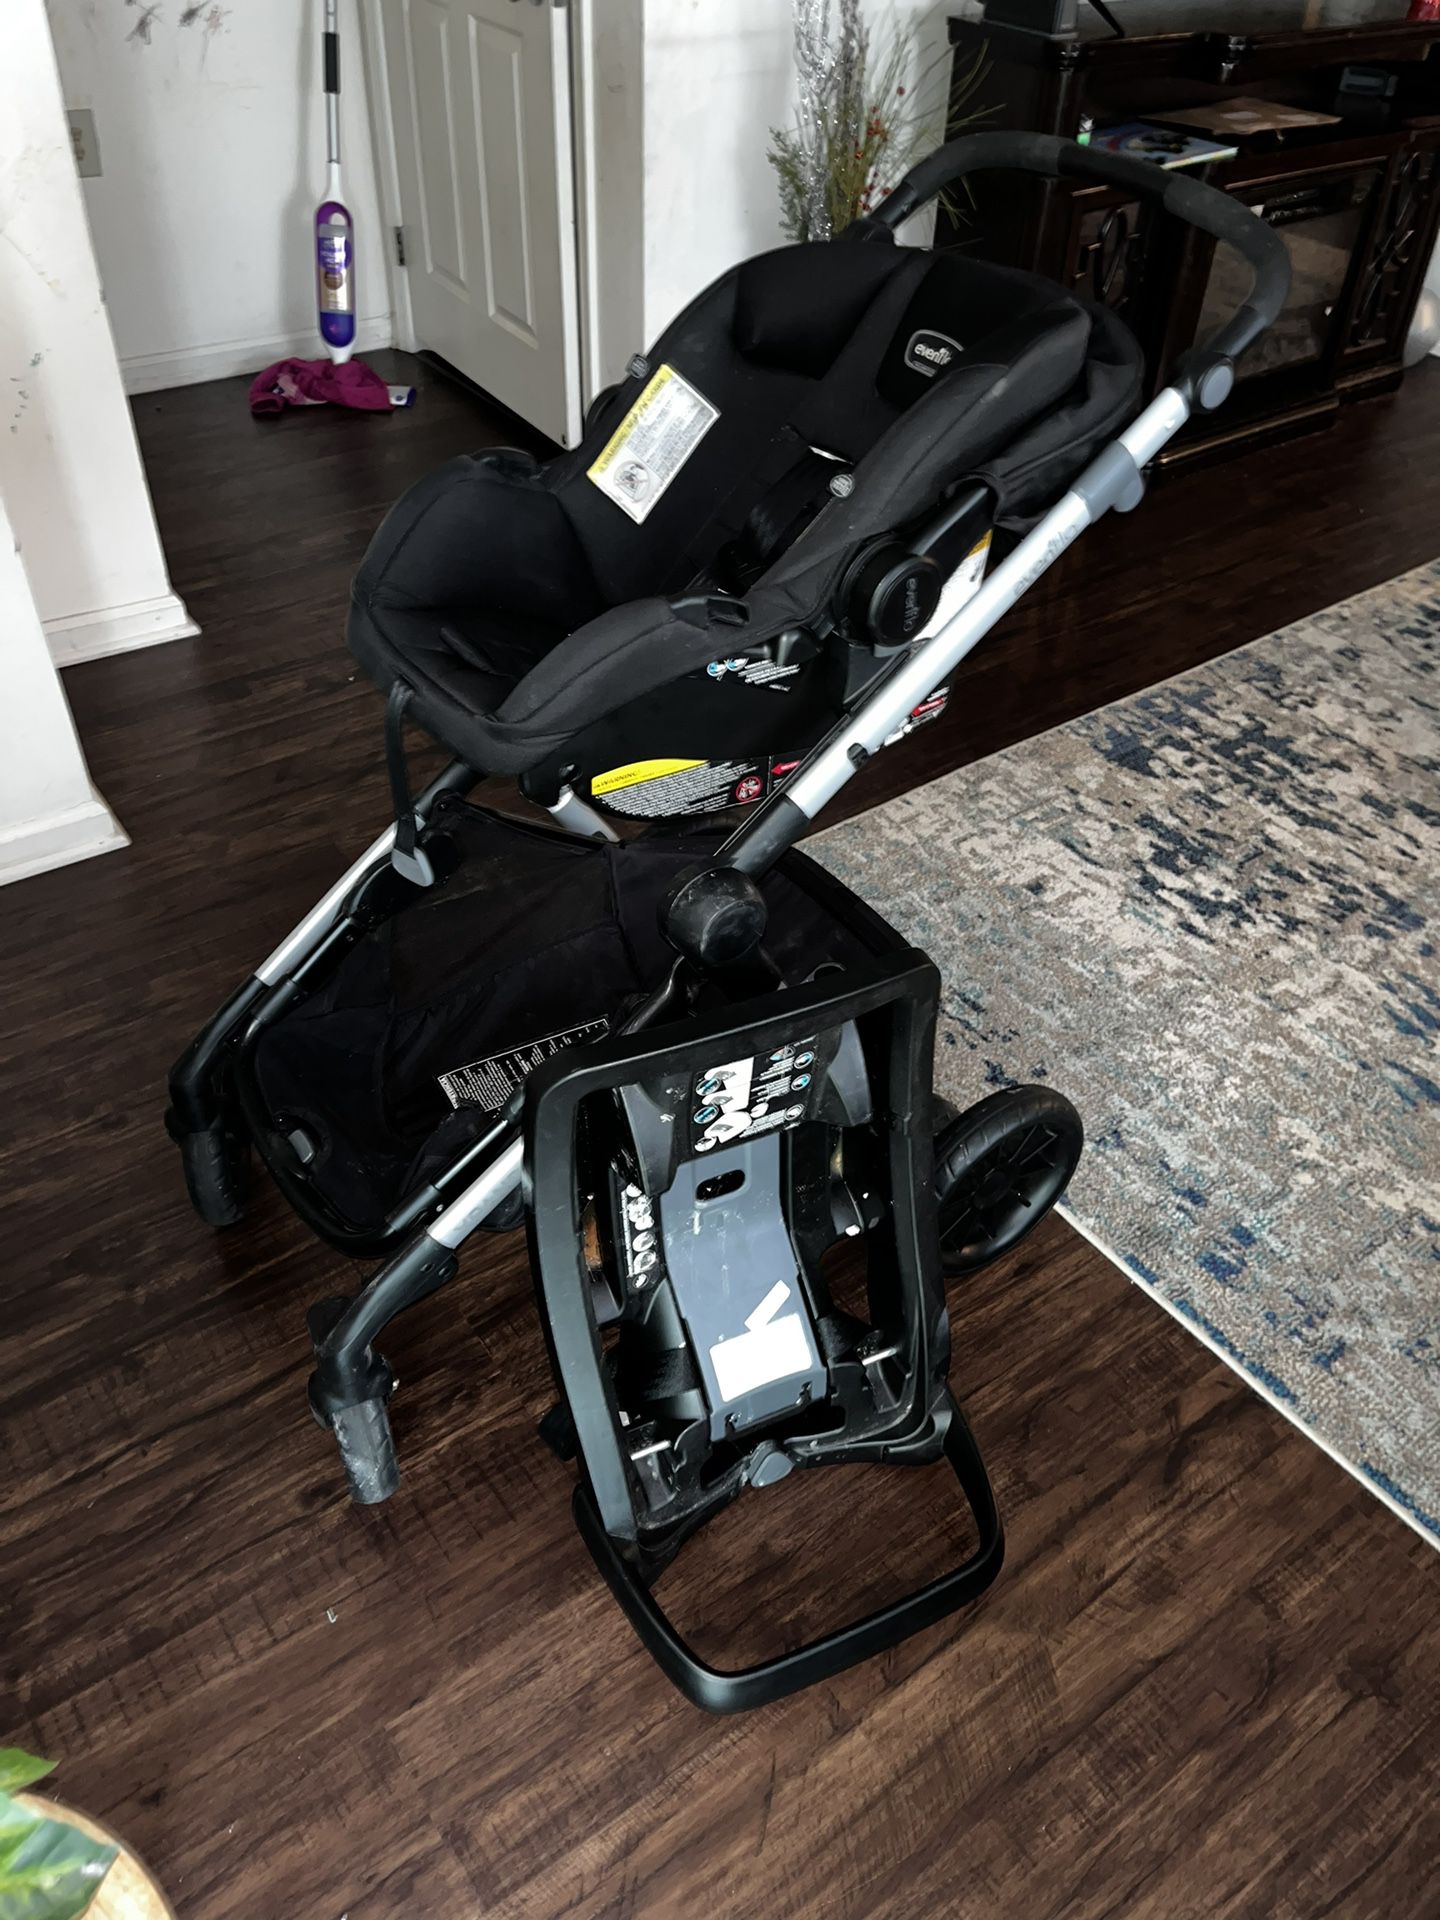 EvenFlo Baby Car seat/stroller Set